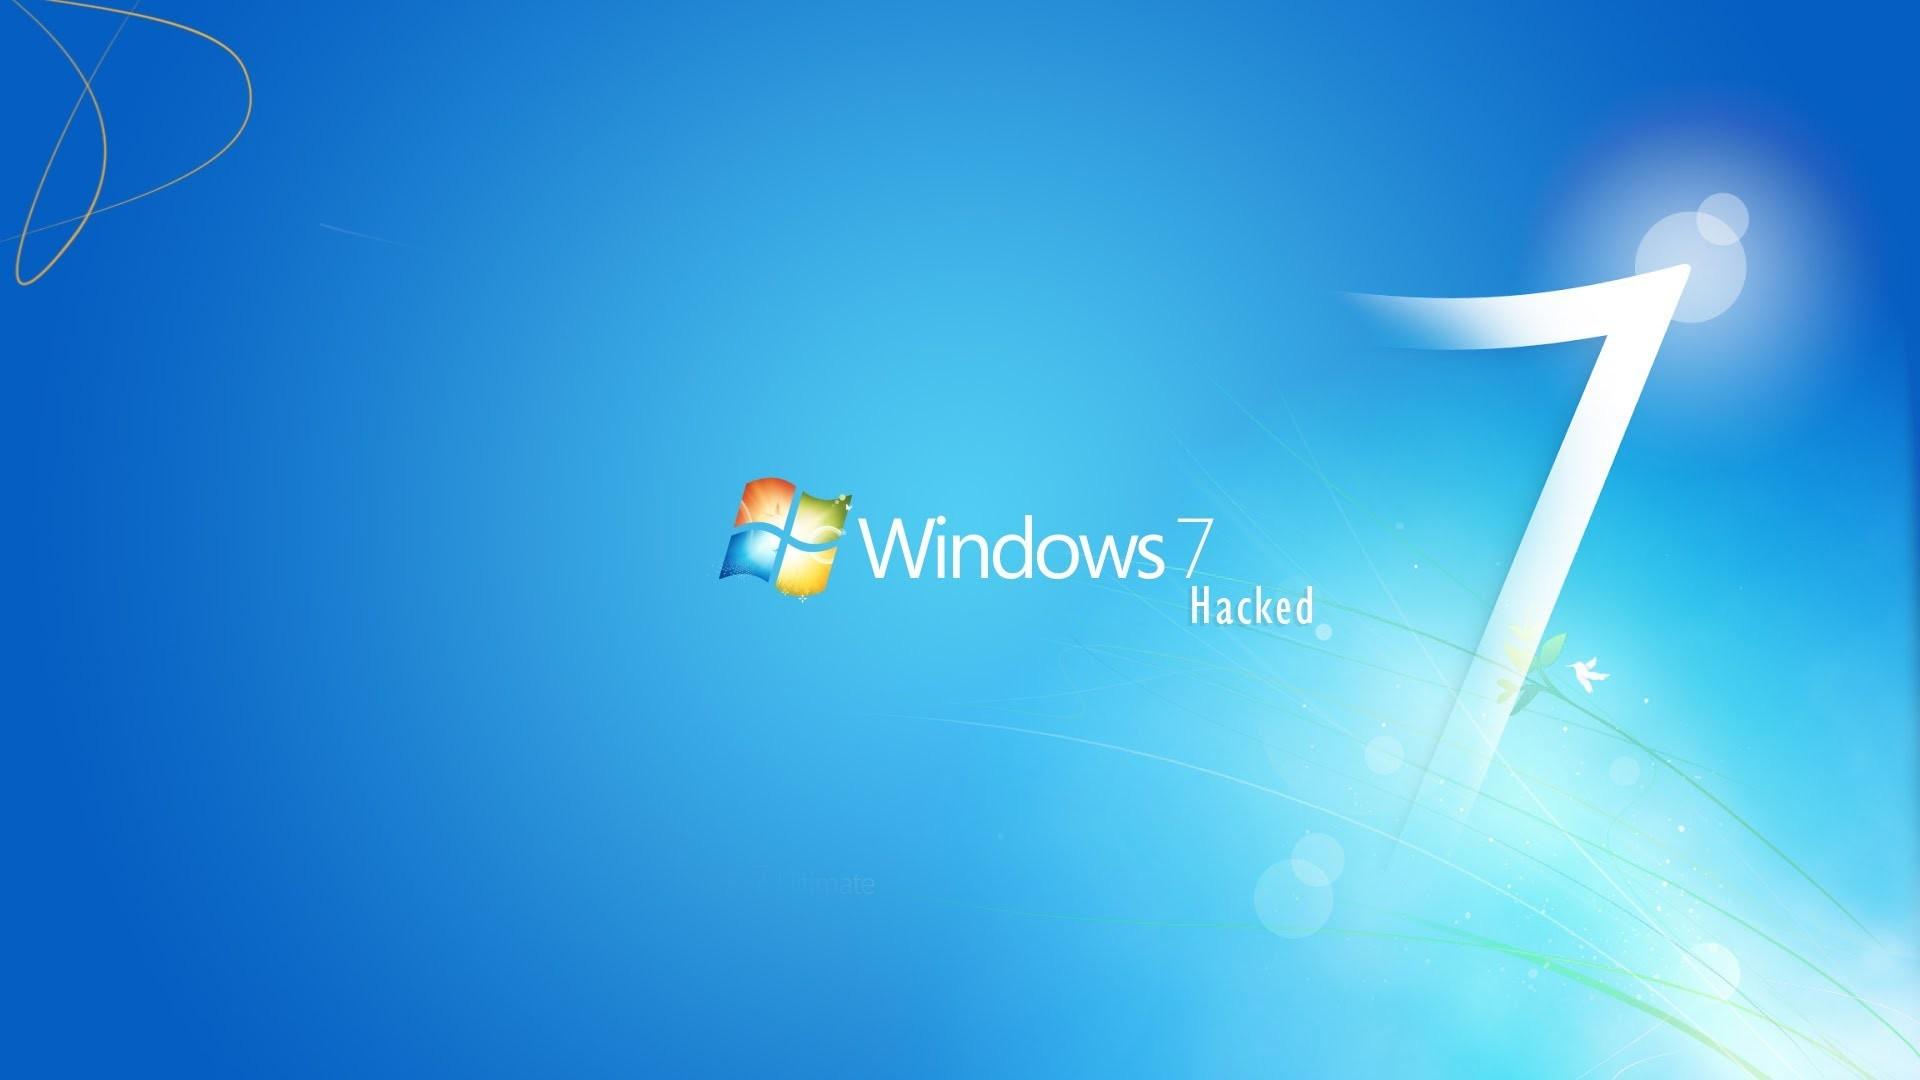 Windows 7 Home Premium Wallpaper background picture